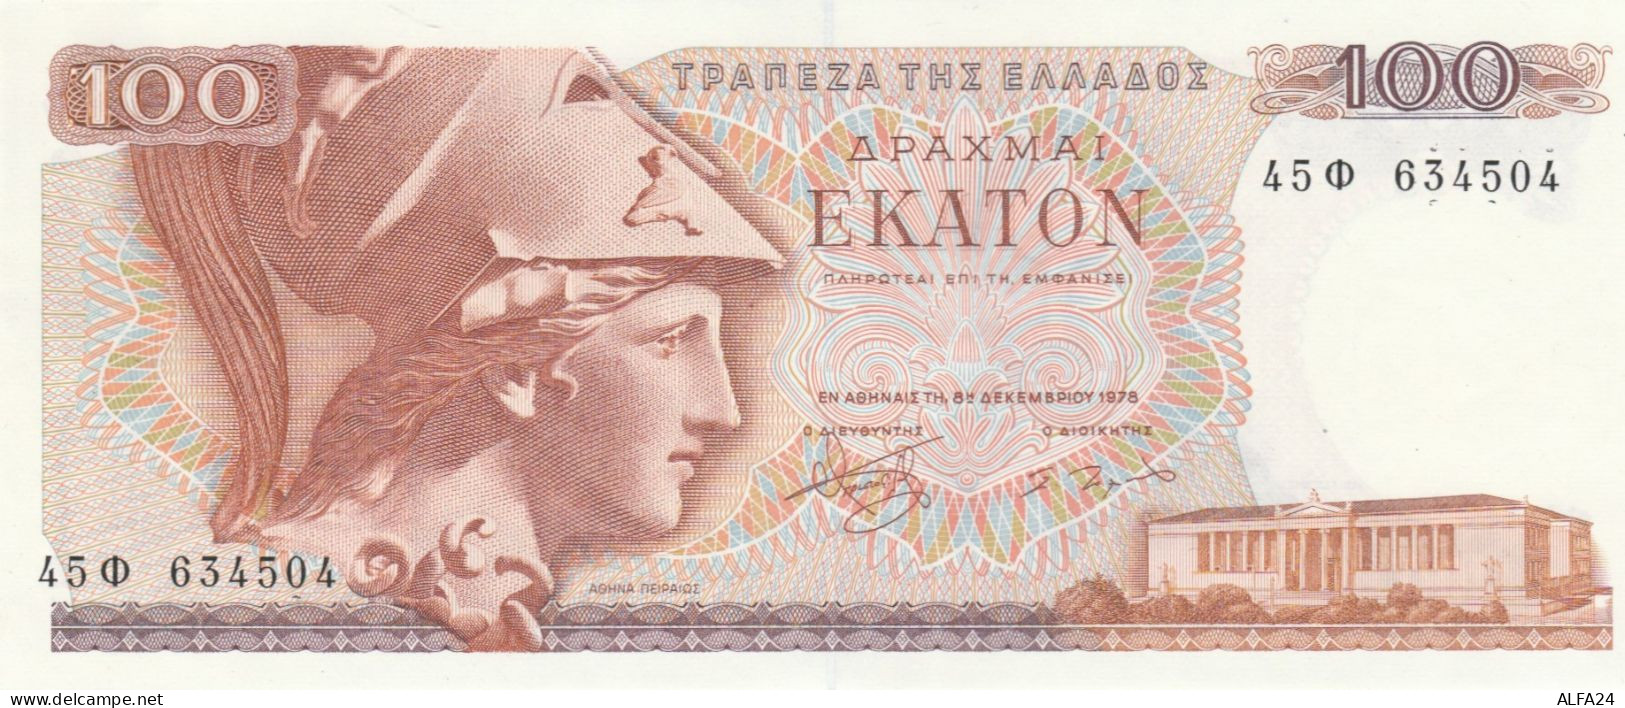 BANCONOTA GRECIA 100 UNC (RY2682 - Grèce